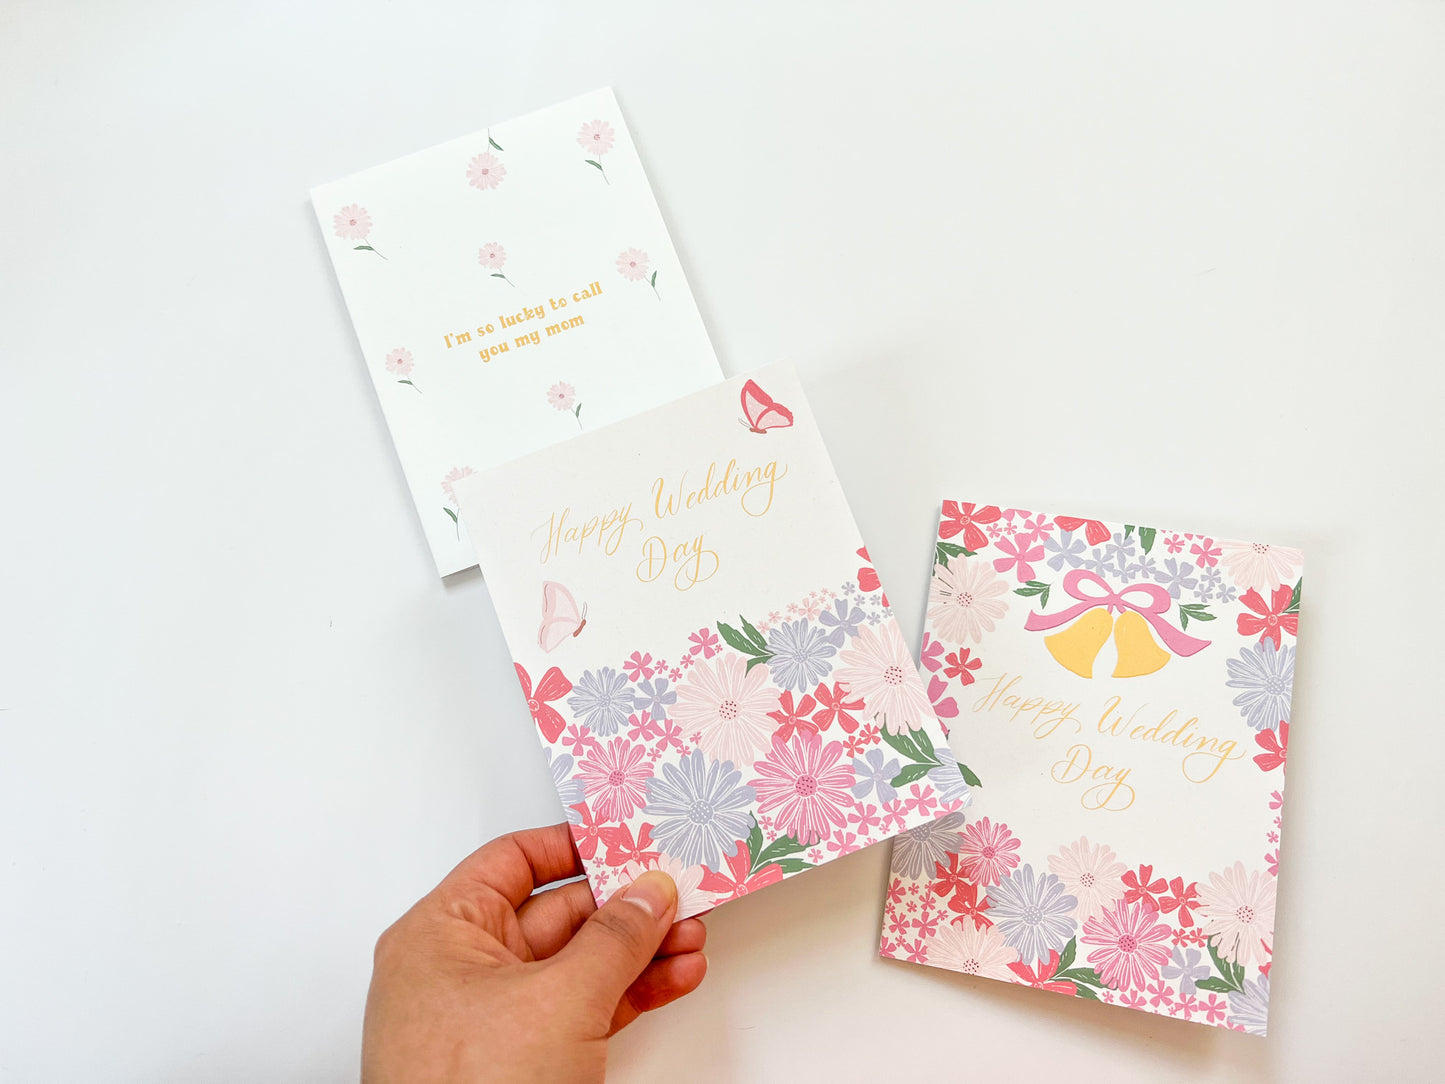 cute wedding card with flowers 